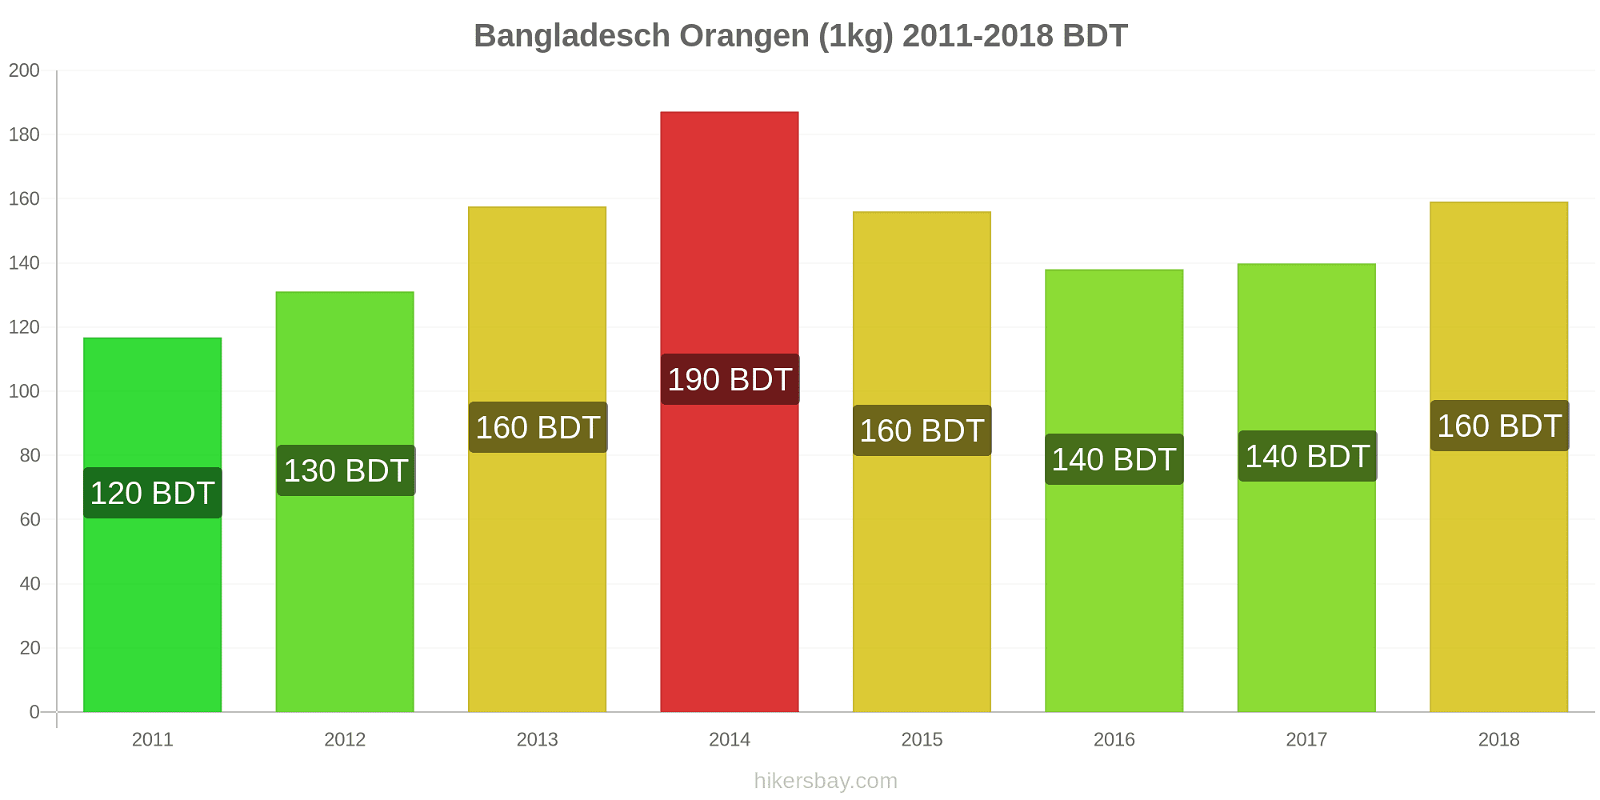 Bangladesch Preisänderungen Orangen (1kg) hikersbay.com